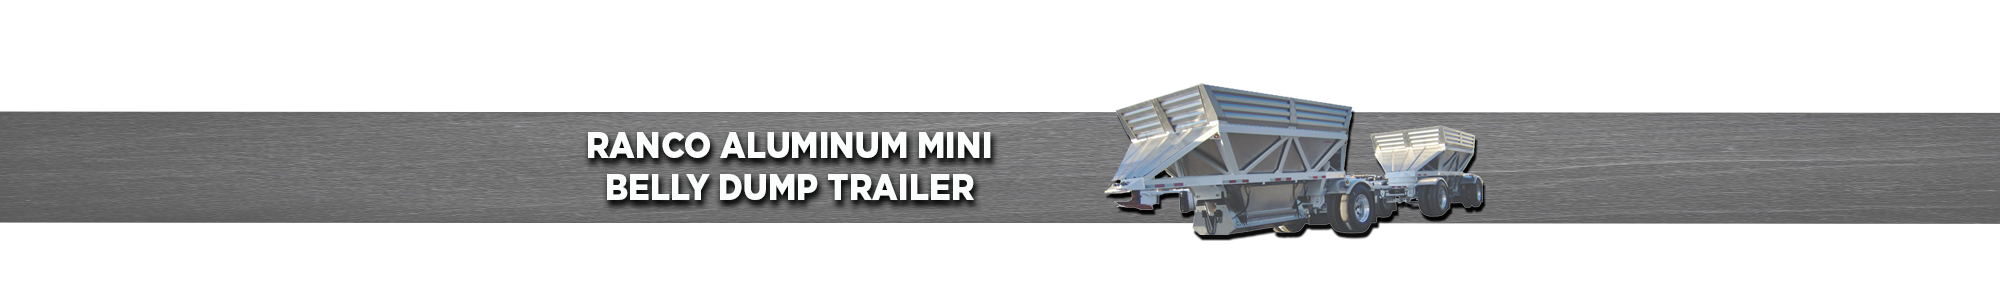 RANCO Aluminum Mini Belly Dump Trailer